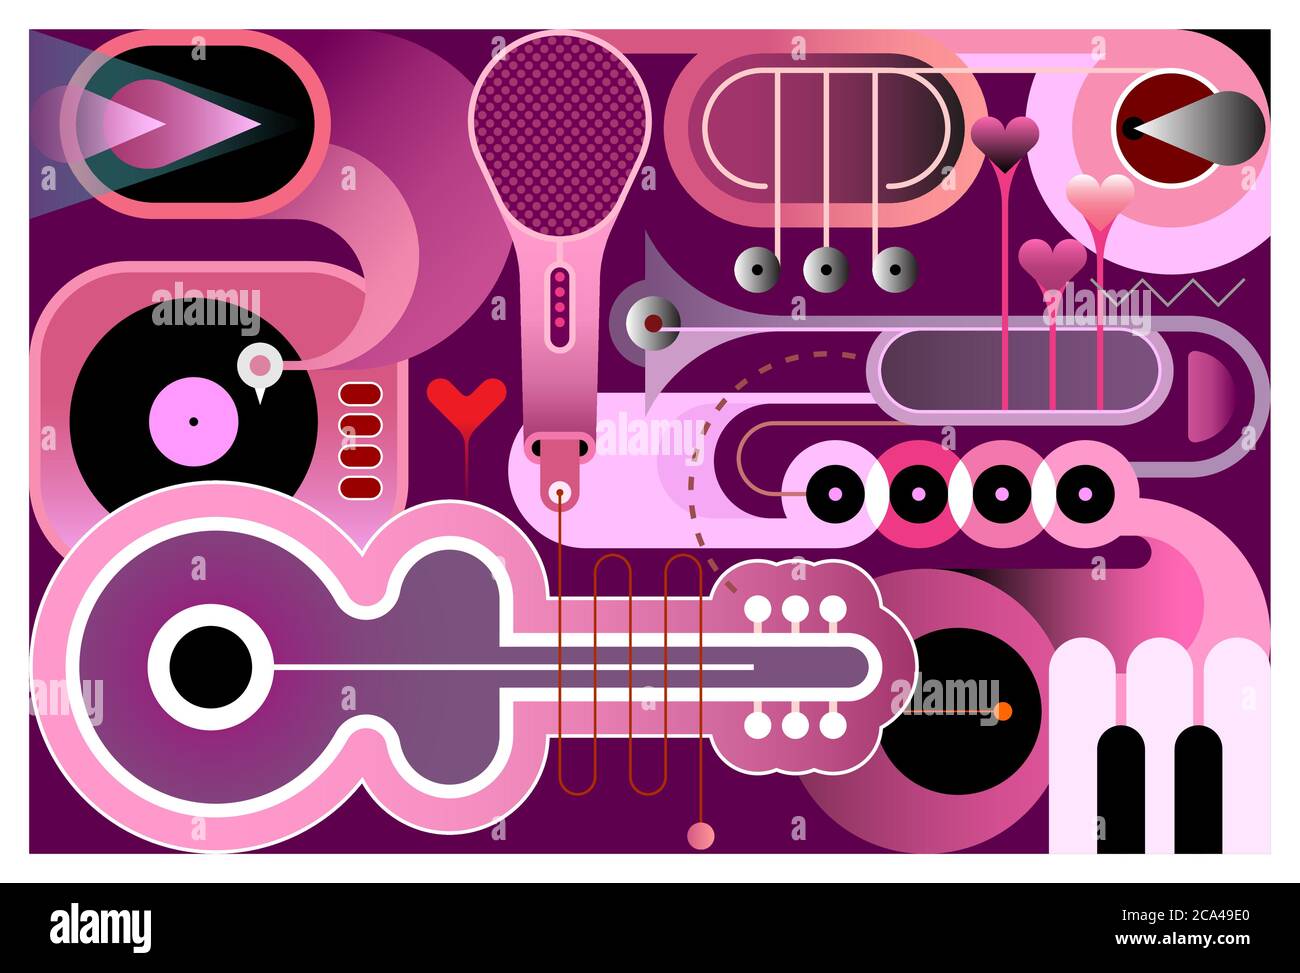 Sombras de color púrpura saturado fondo musical abstracto. Diseño de diferentes instrumentos musicales, ilustración vectorial. Guitarra acústica, saxofón Ilustración del Vector